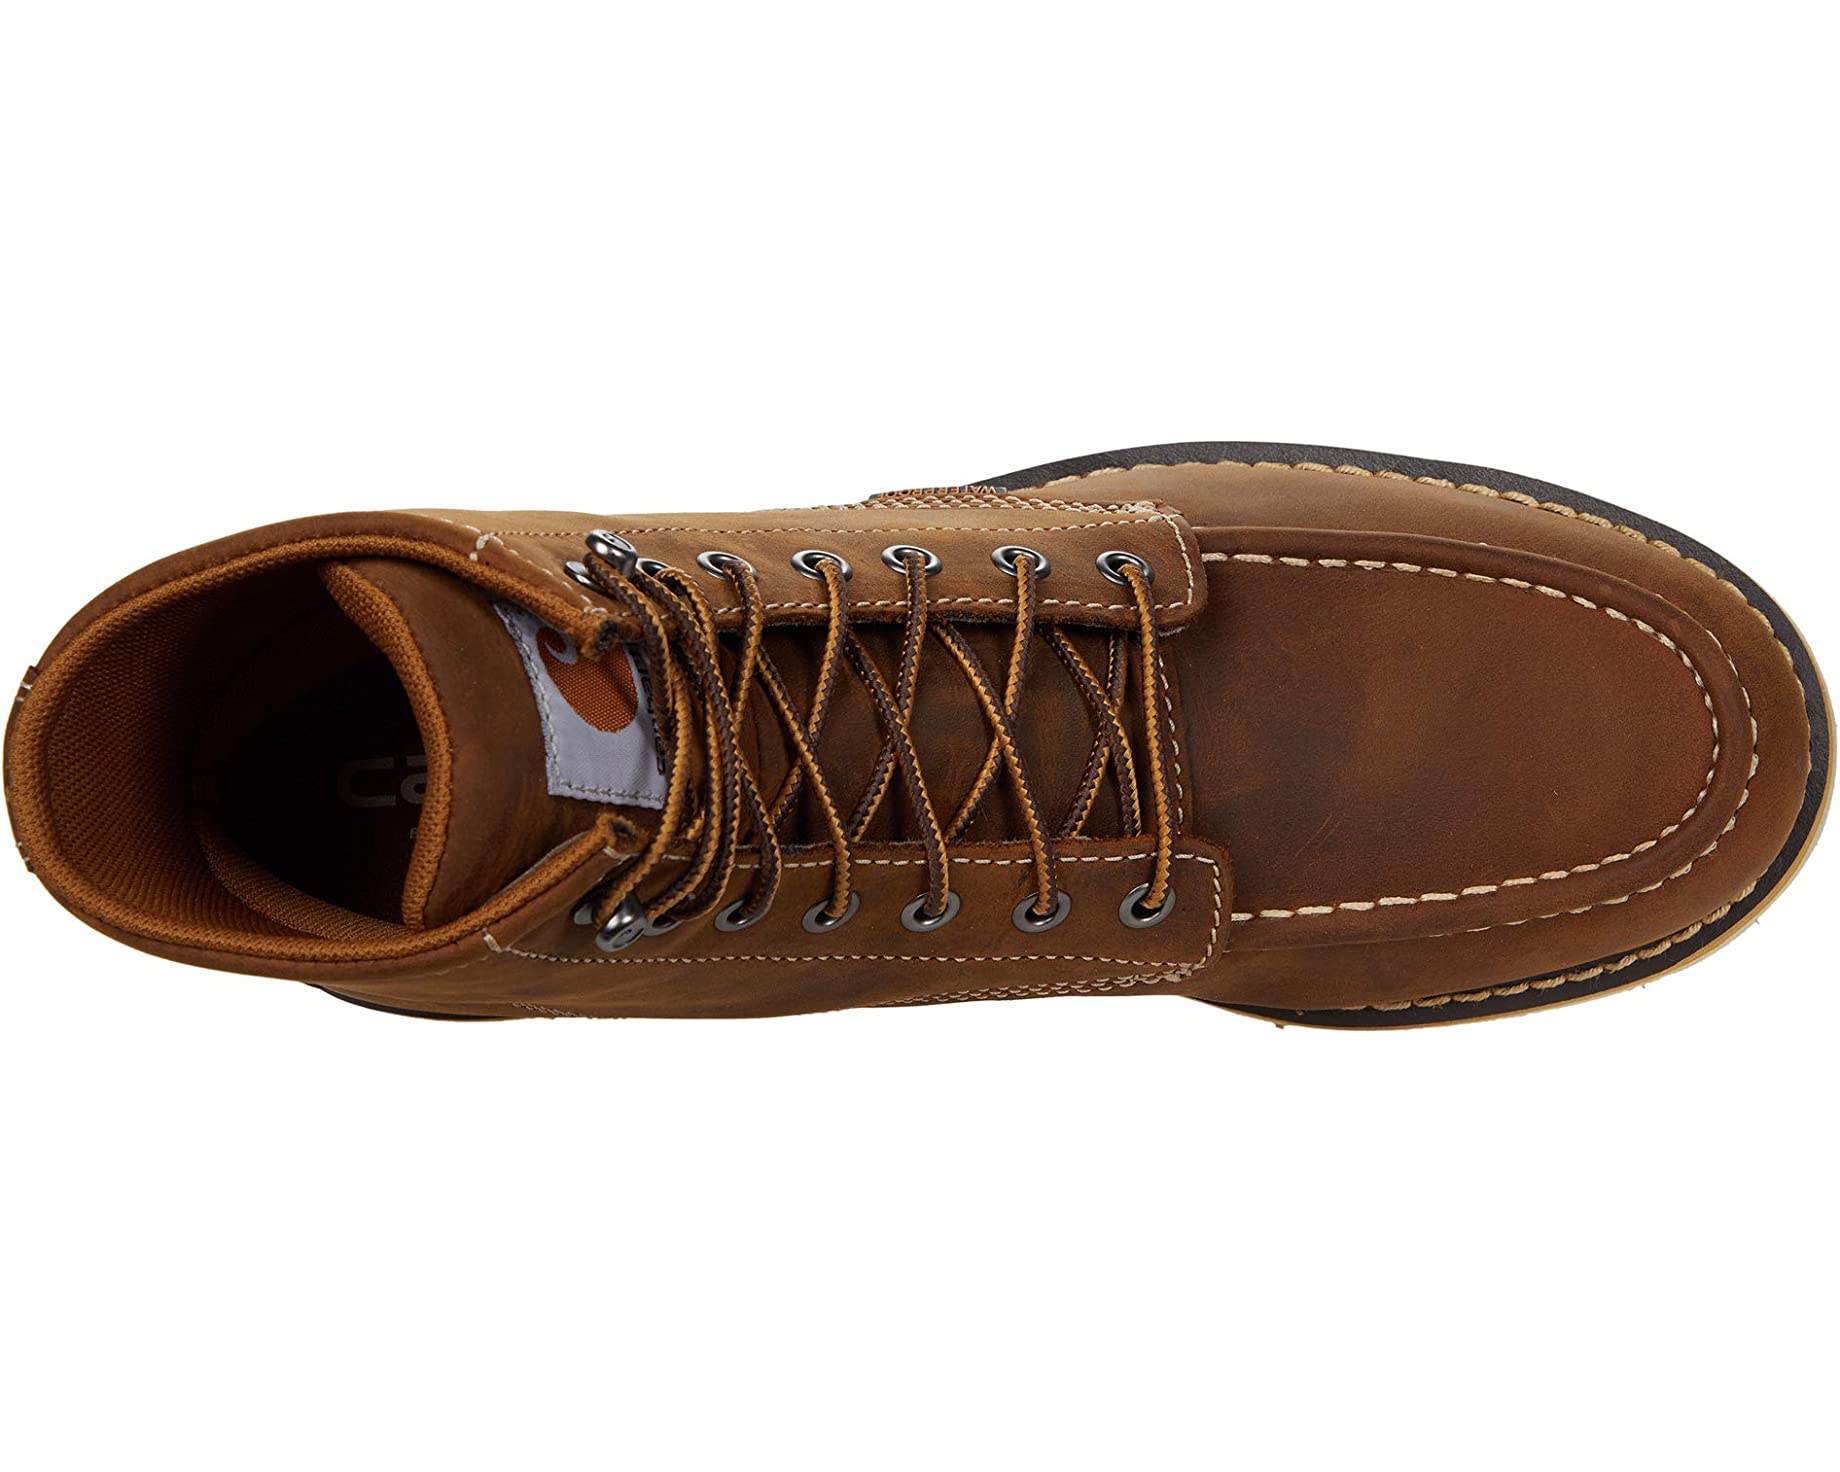 Ботинки Wedge 6 Waterproof Steel Toe Carhartt, коричневый цена и фото